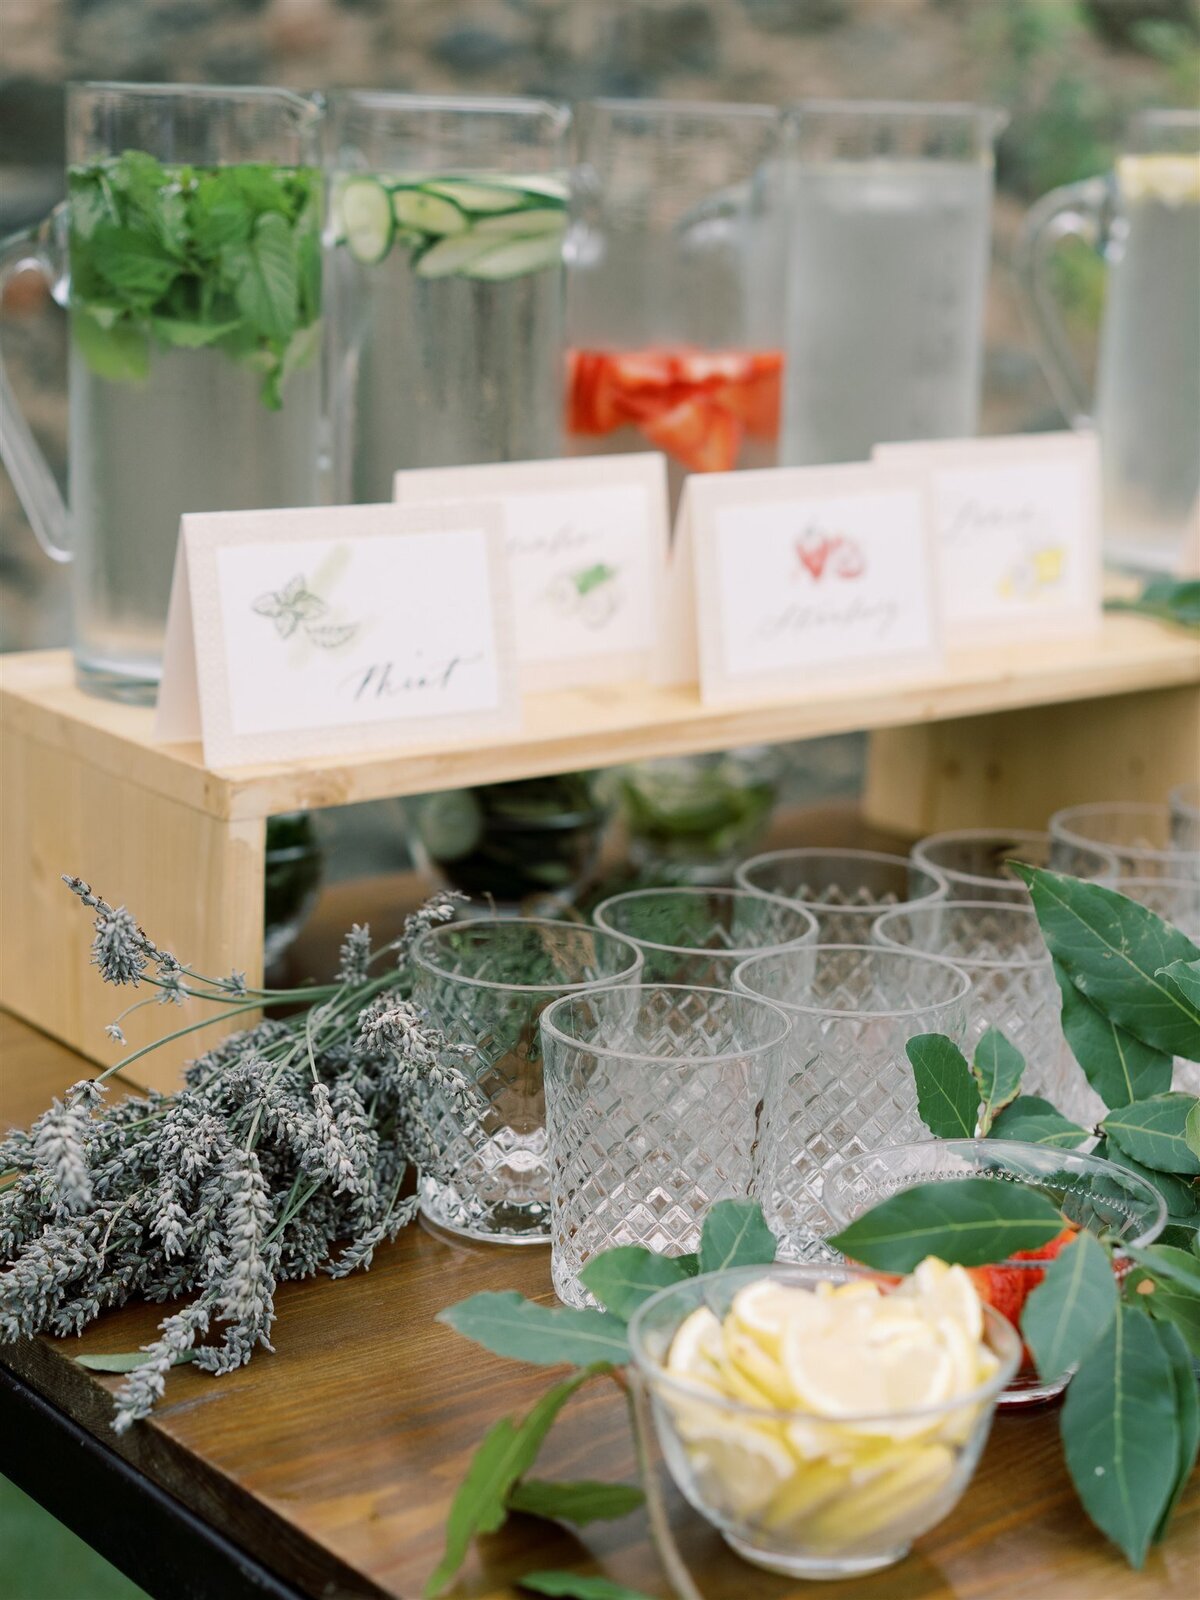 Garden-inspired details for an outdoor wedding cocktail